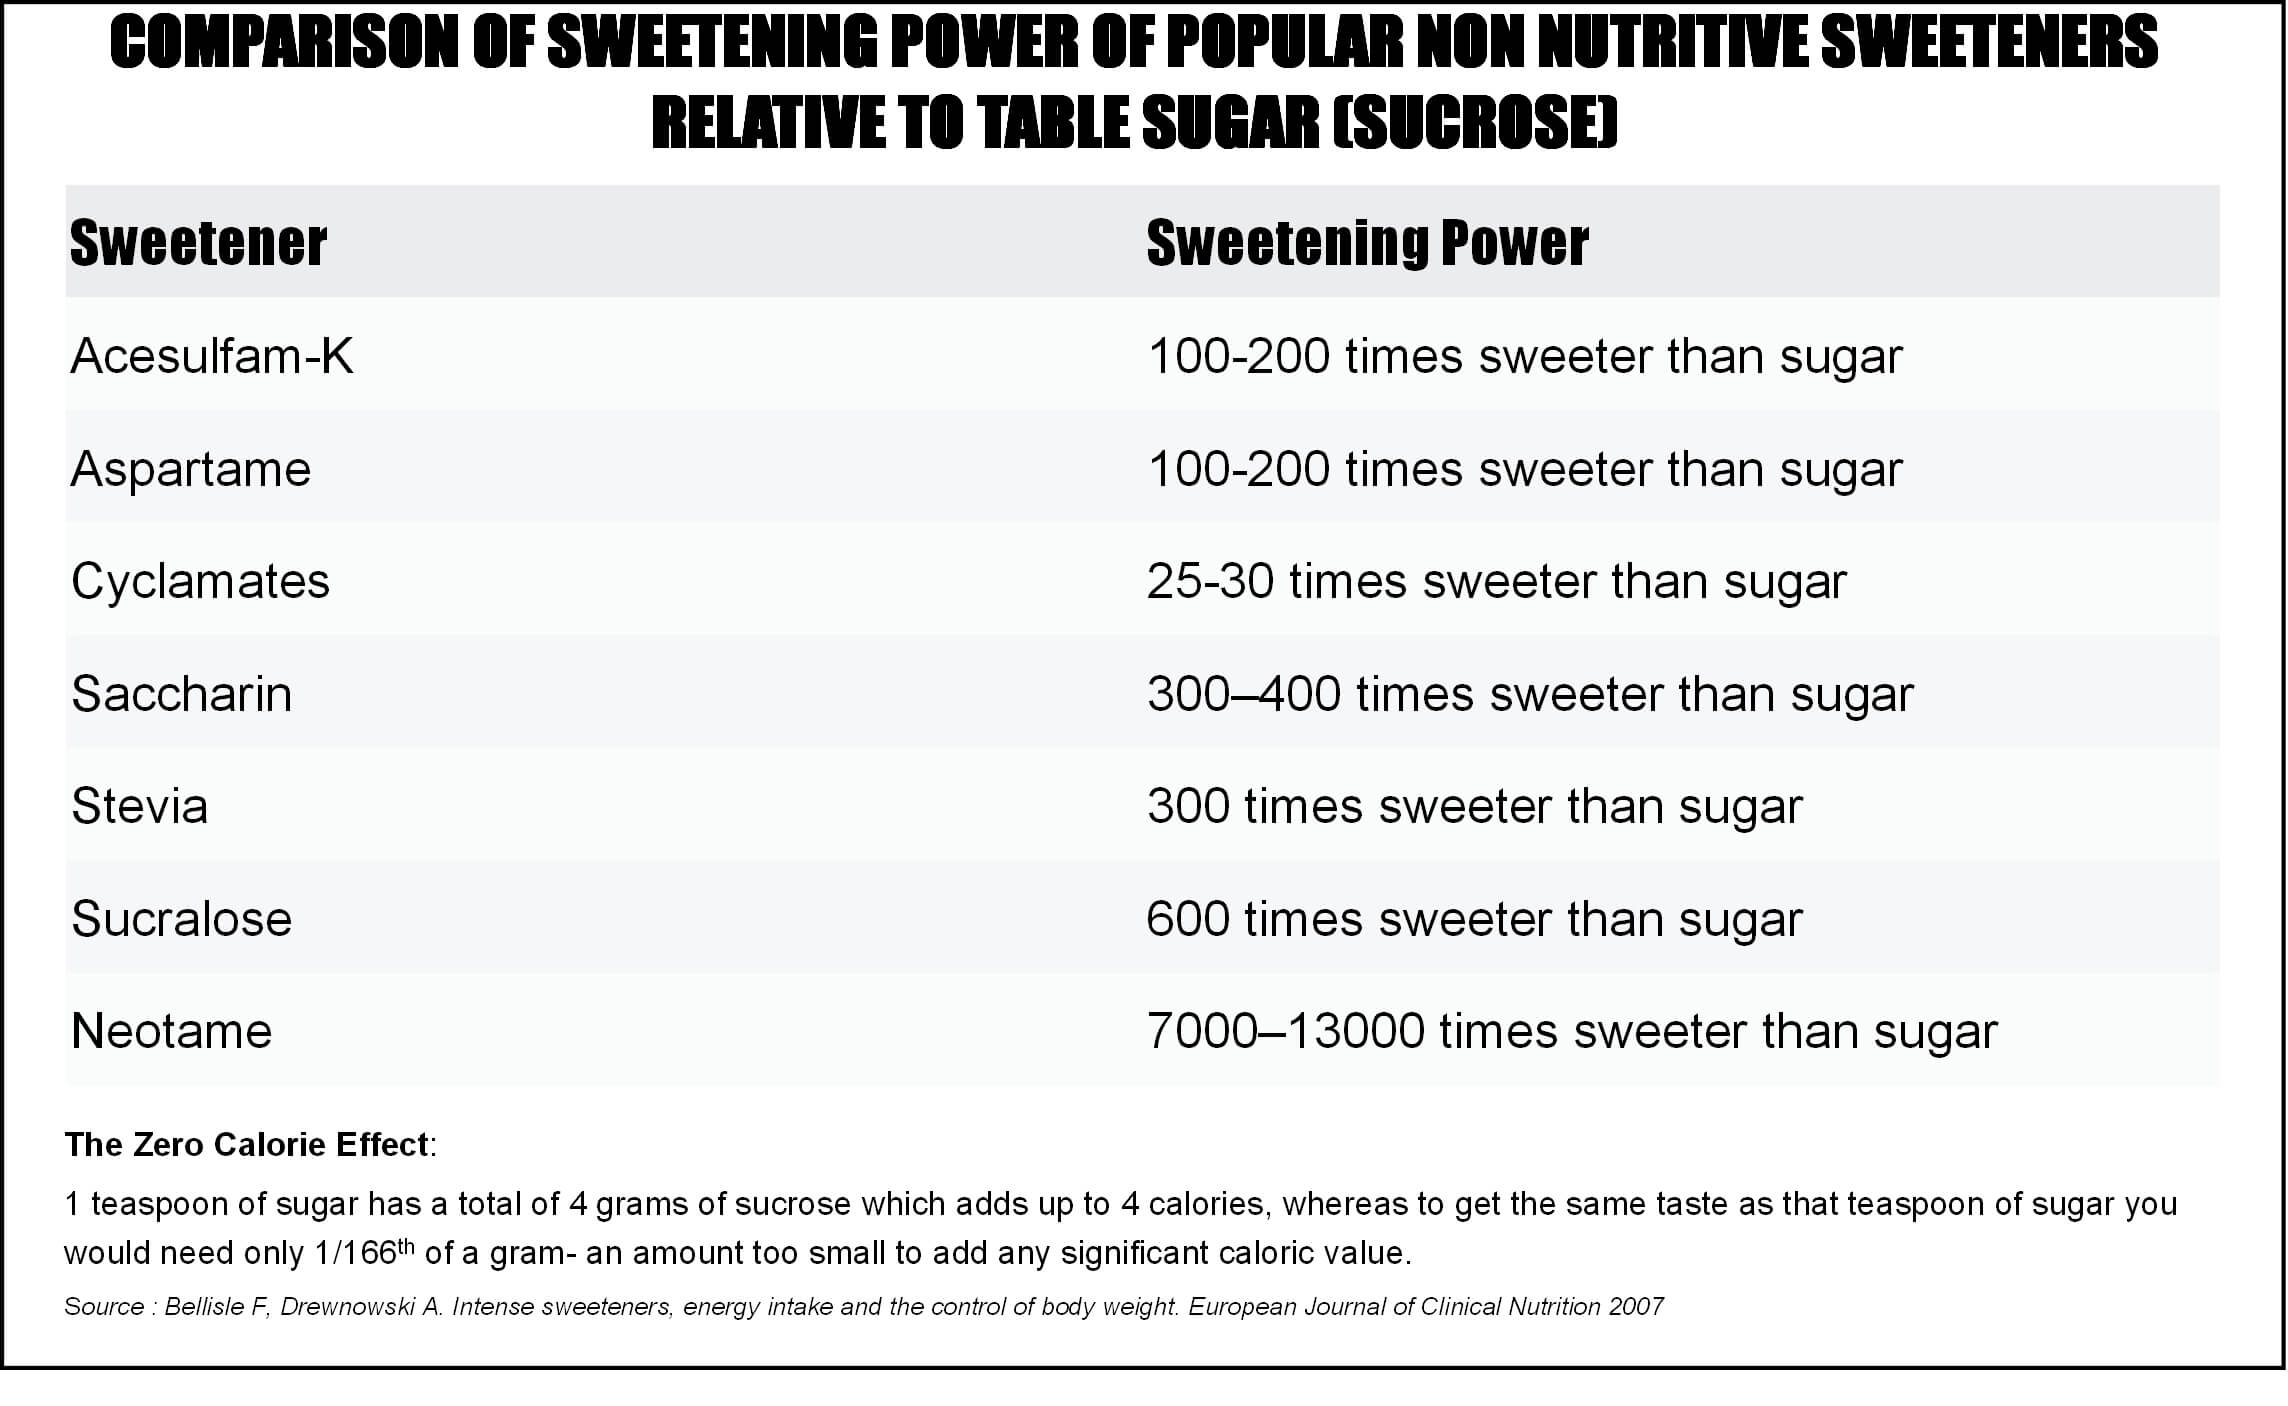 Image Credit: http://www.naturallyintense.net/blog/wp-content/uploads/2014/02/Artificial-Sweeteners-May-Make-You-Gain-Weight-Relative-Sweetness-Chart.jpg